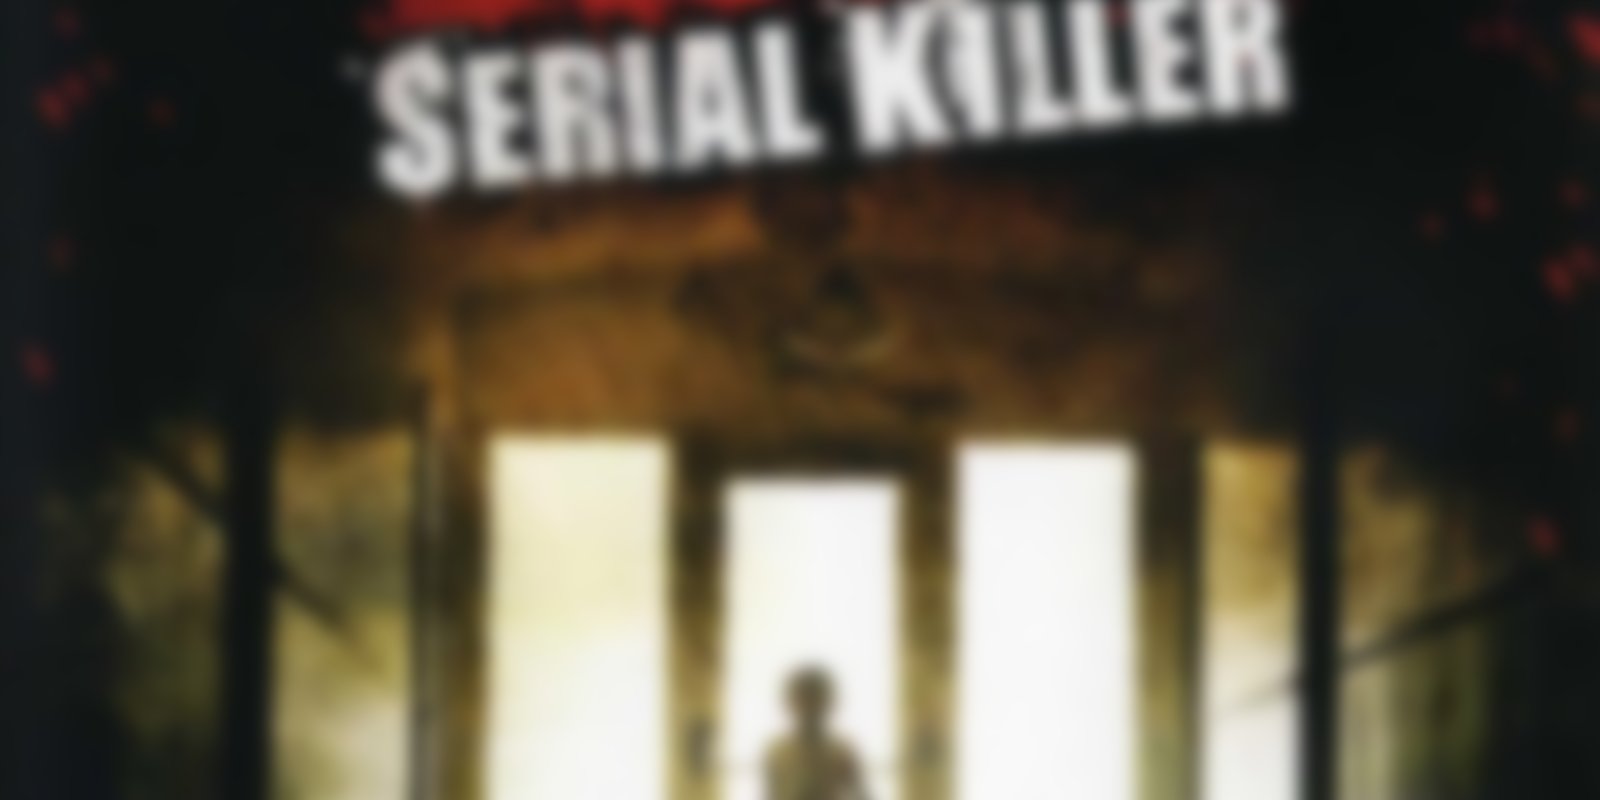 Bloody Serial Killer